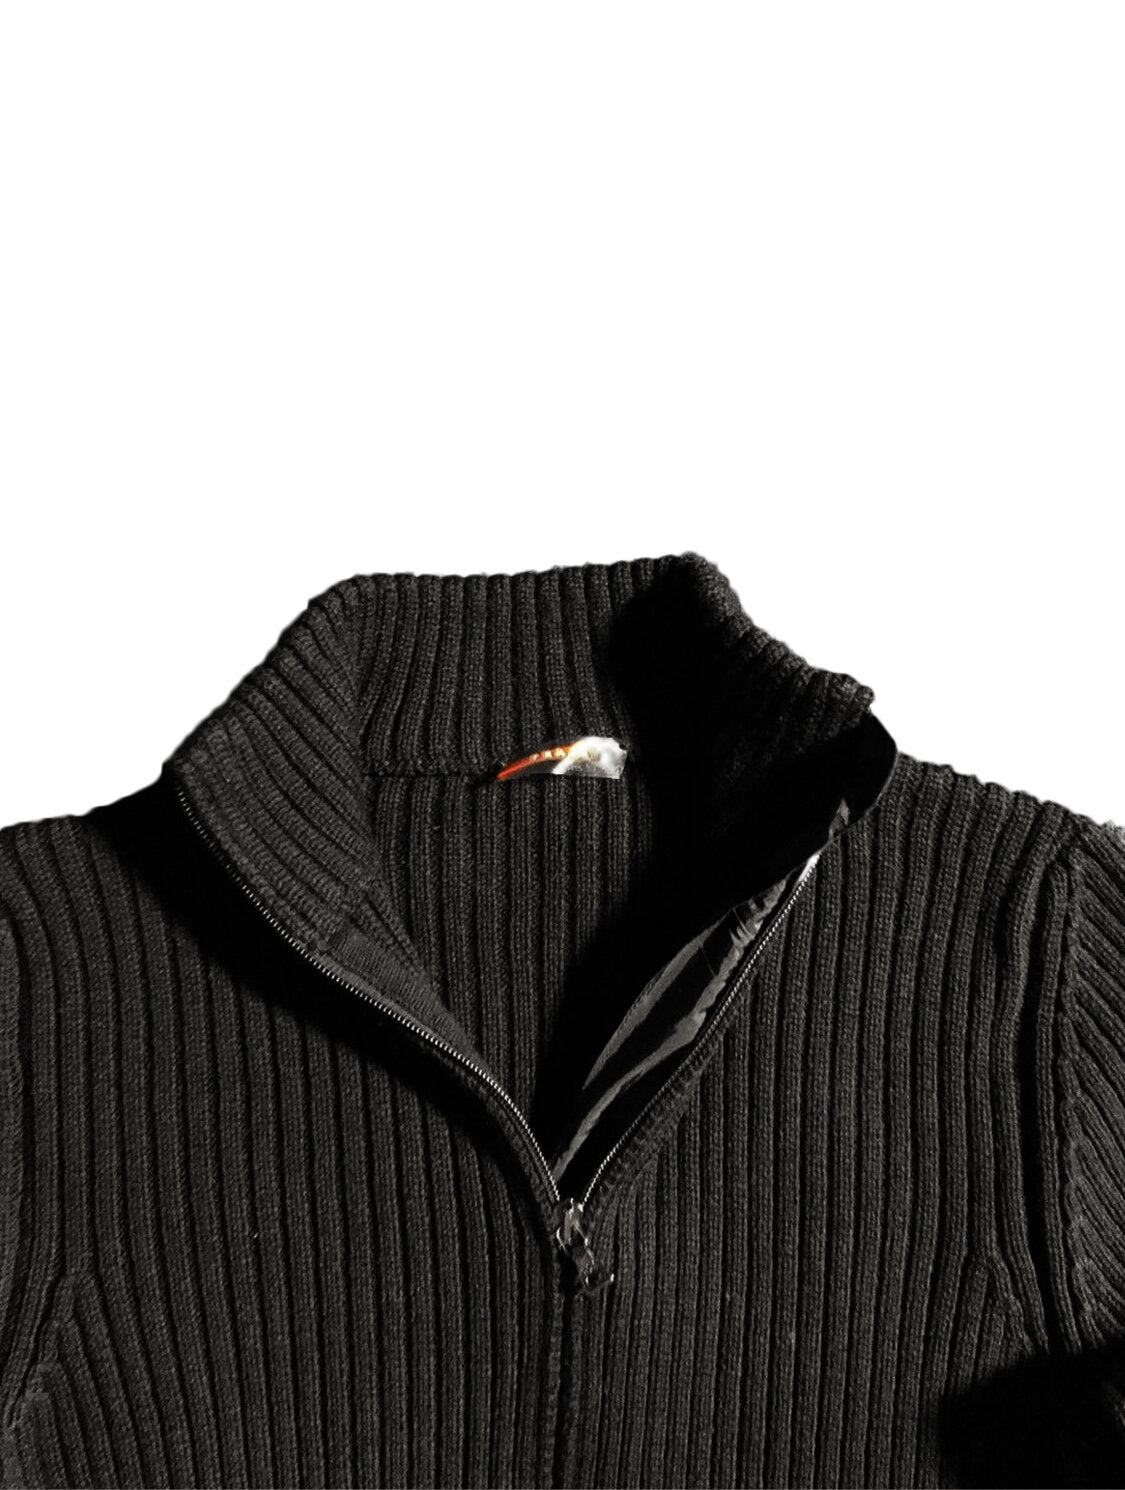 Prada archive drivers knit 1999aw - ニット/セーター